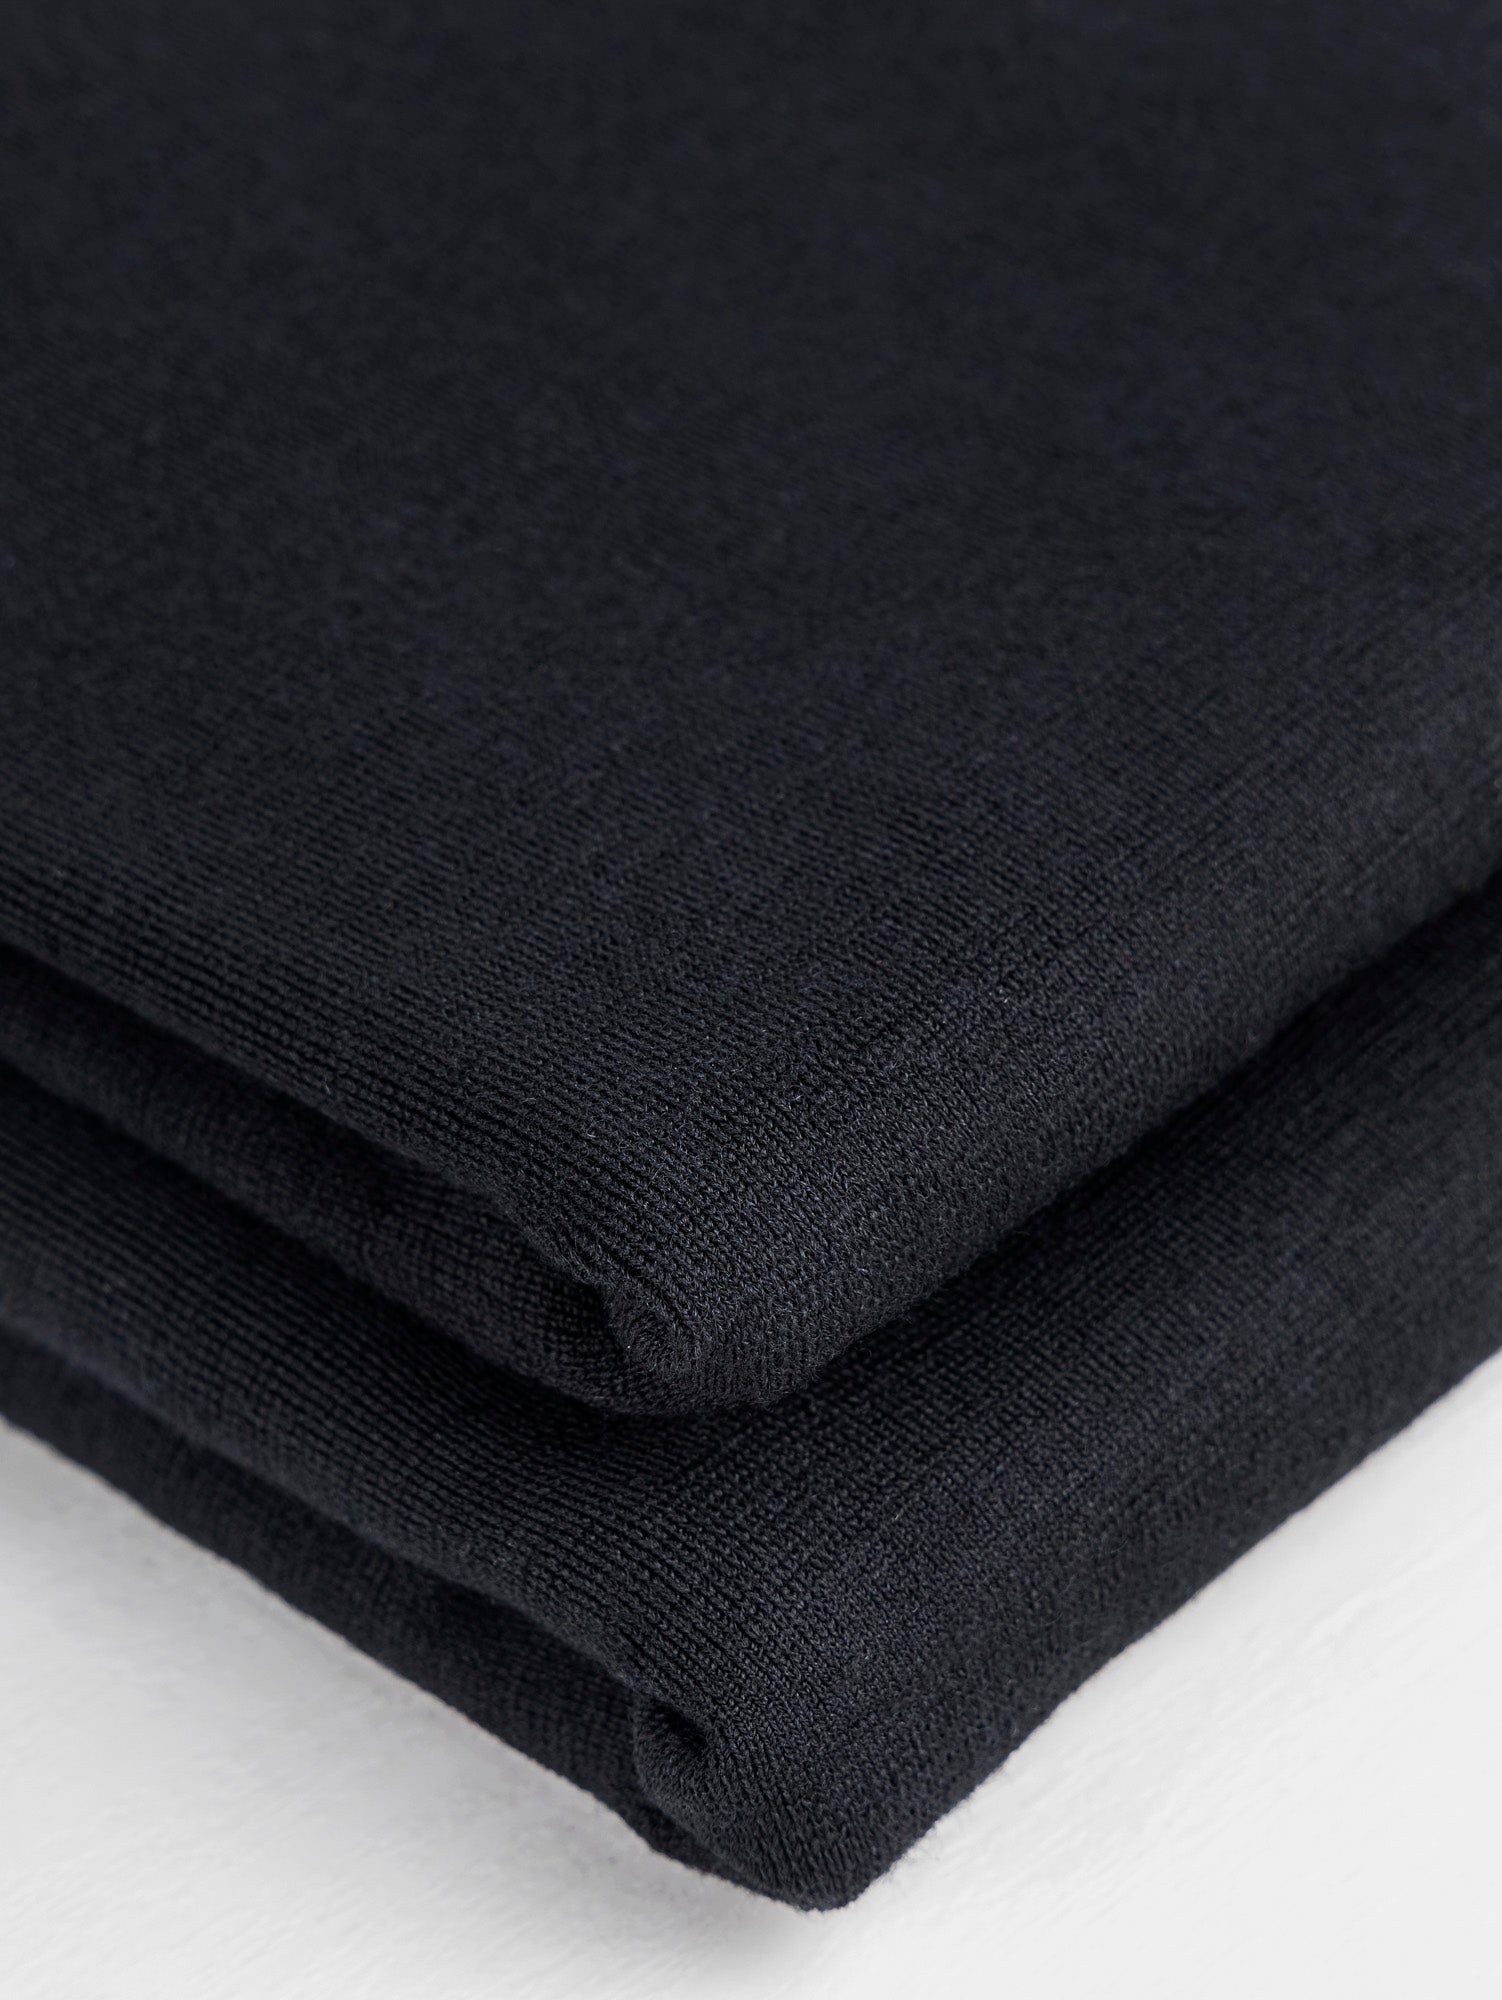 100% Cotton Black Fabric